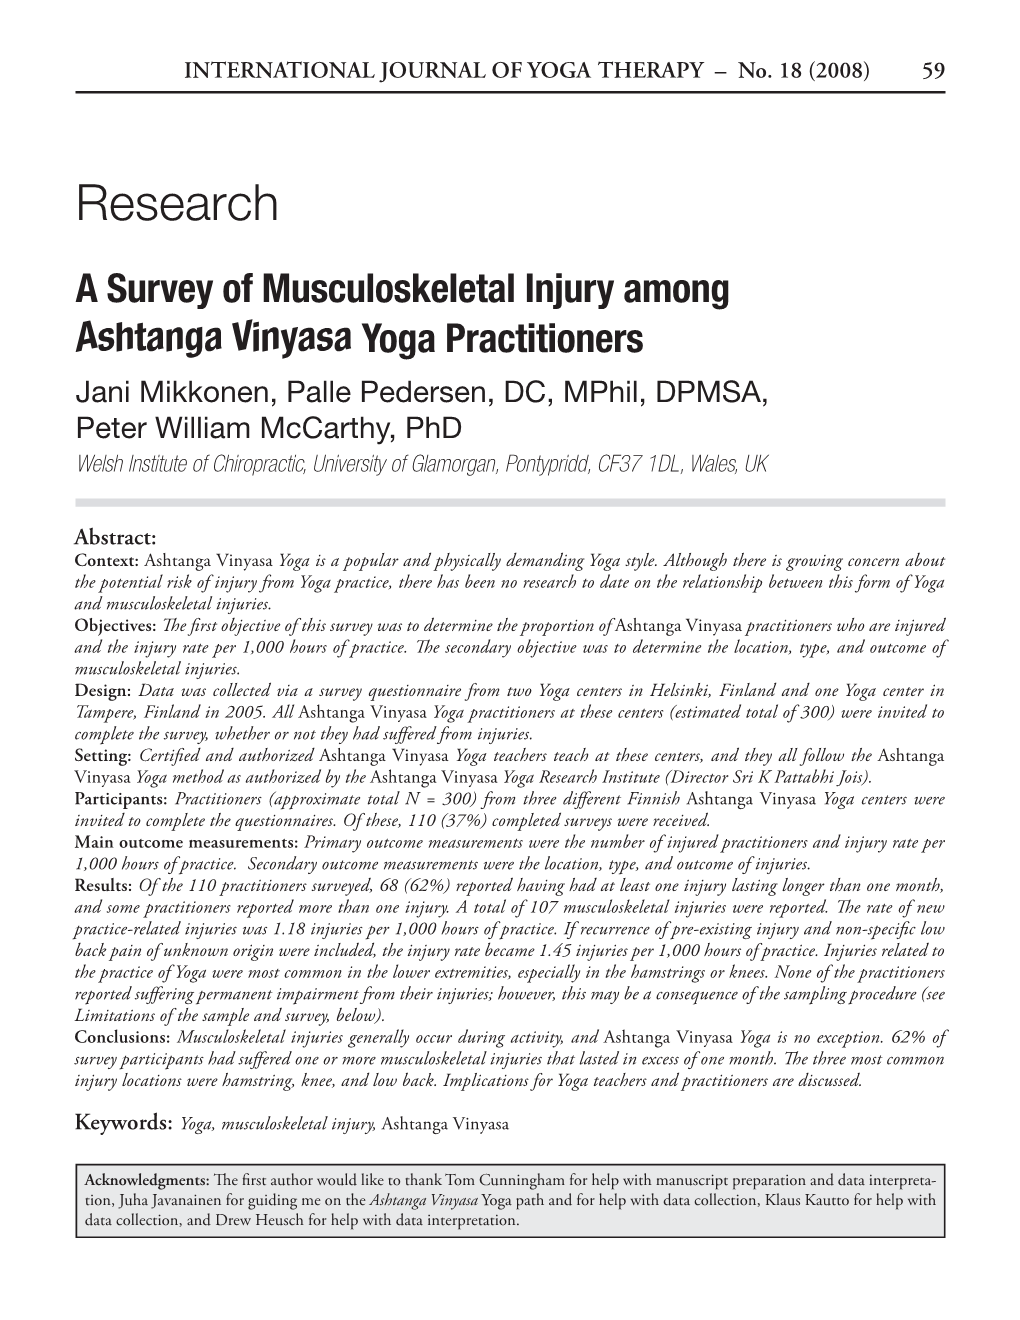 A Survey of Musculoskeletal Injury Among Ashtanga Vinyasa Yoga Practitioners